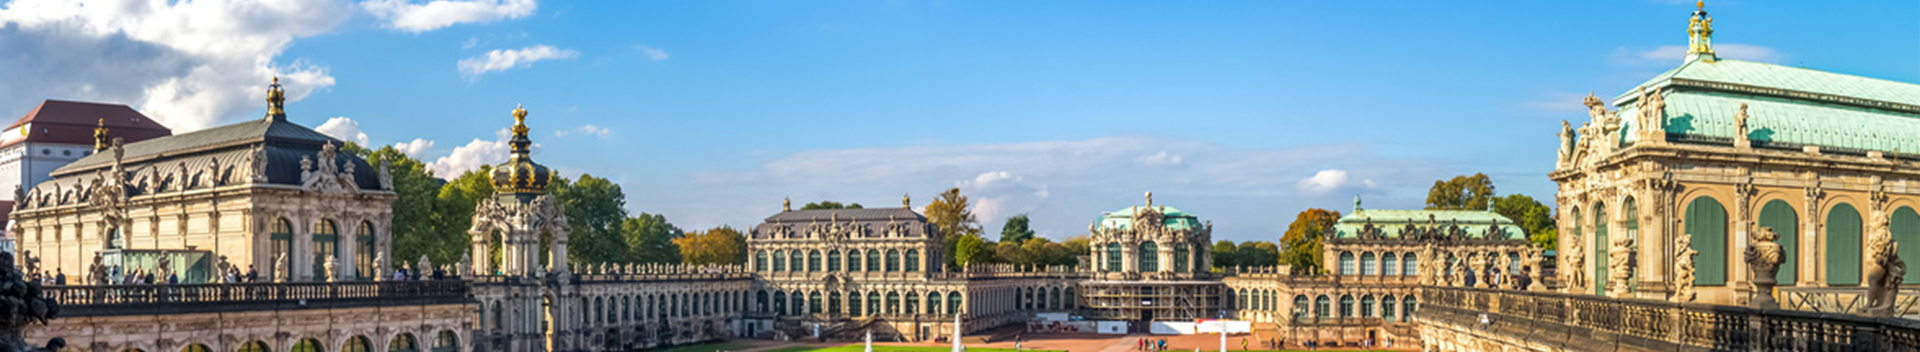 Prague to Dresden Tour – Private Dresden Tours from Prague